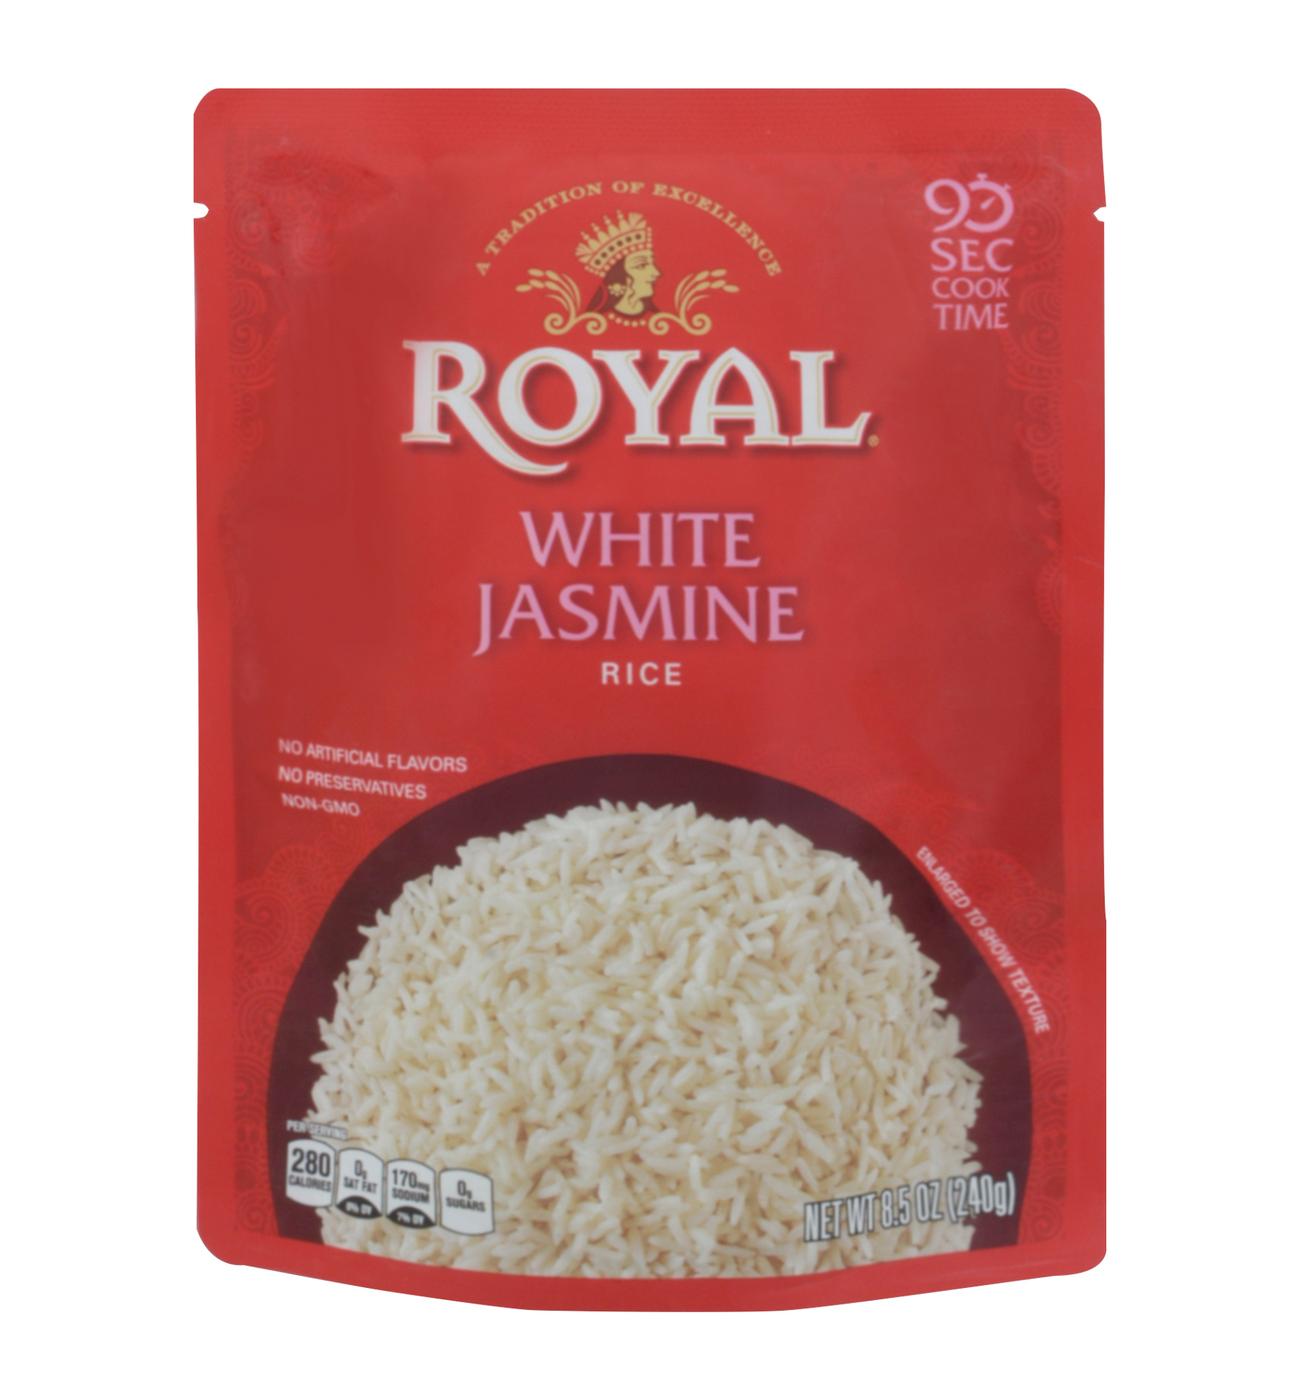 Royal White Jasmine Rice